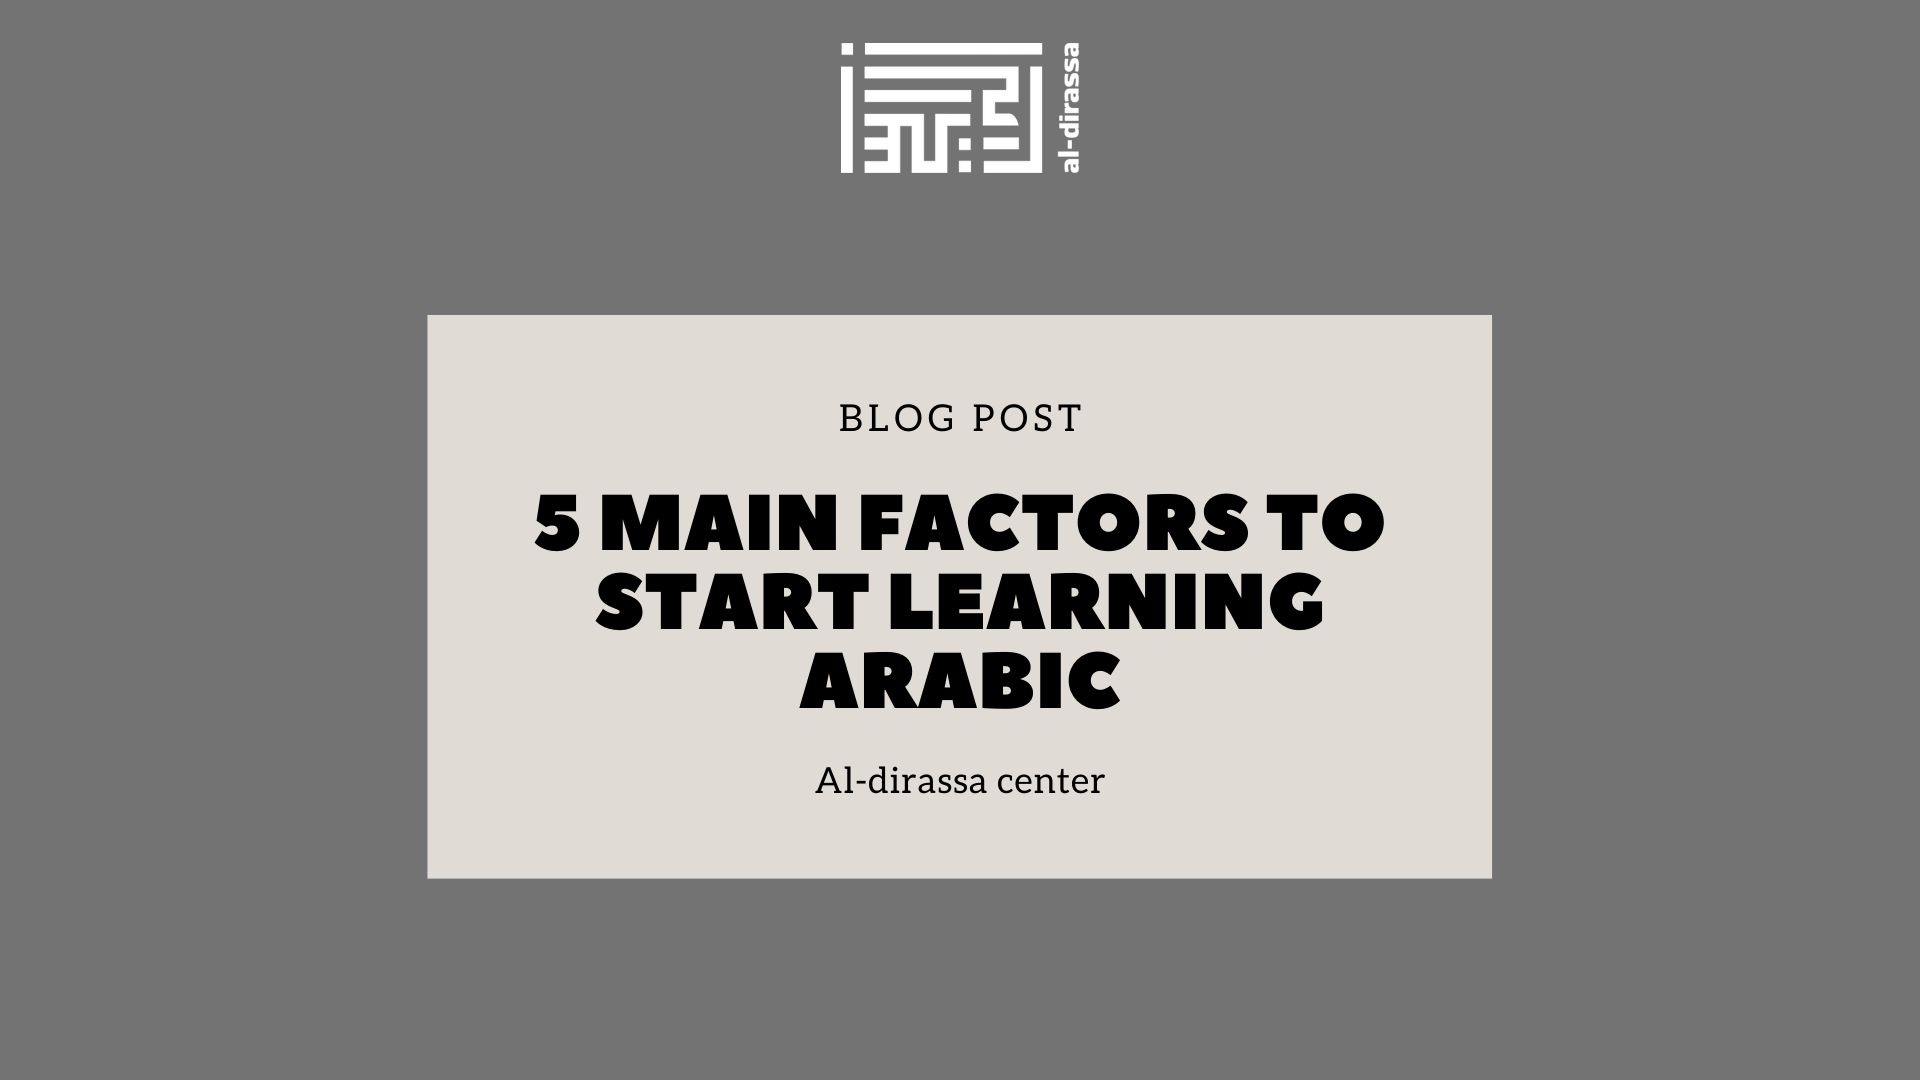 5 main factors to start learning Arabic - Al-dirassa